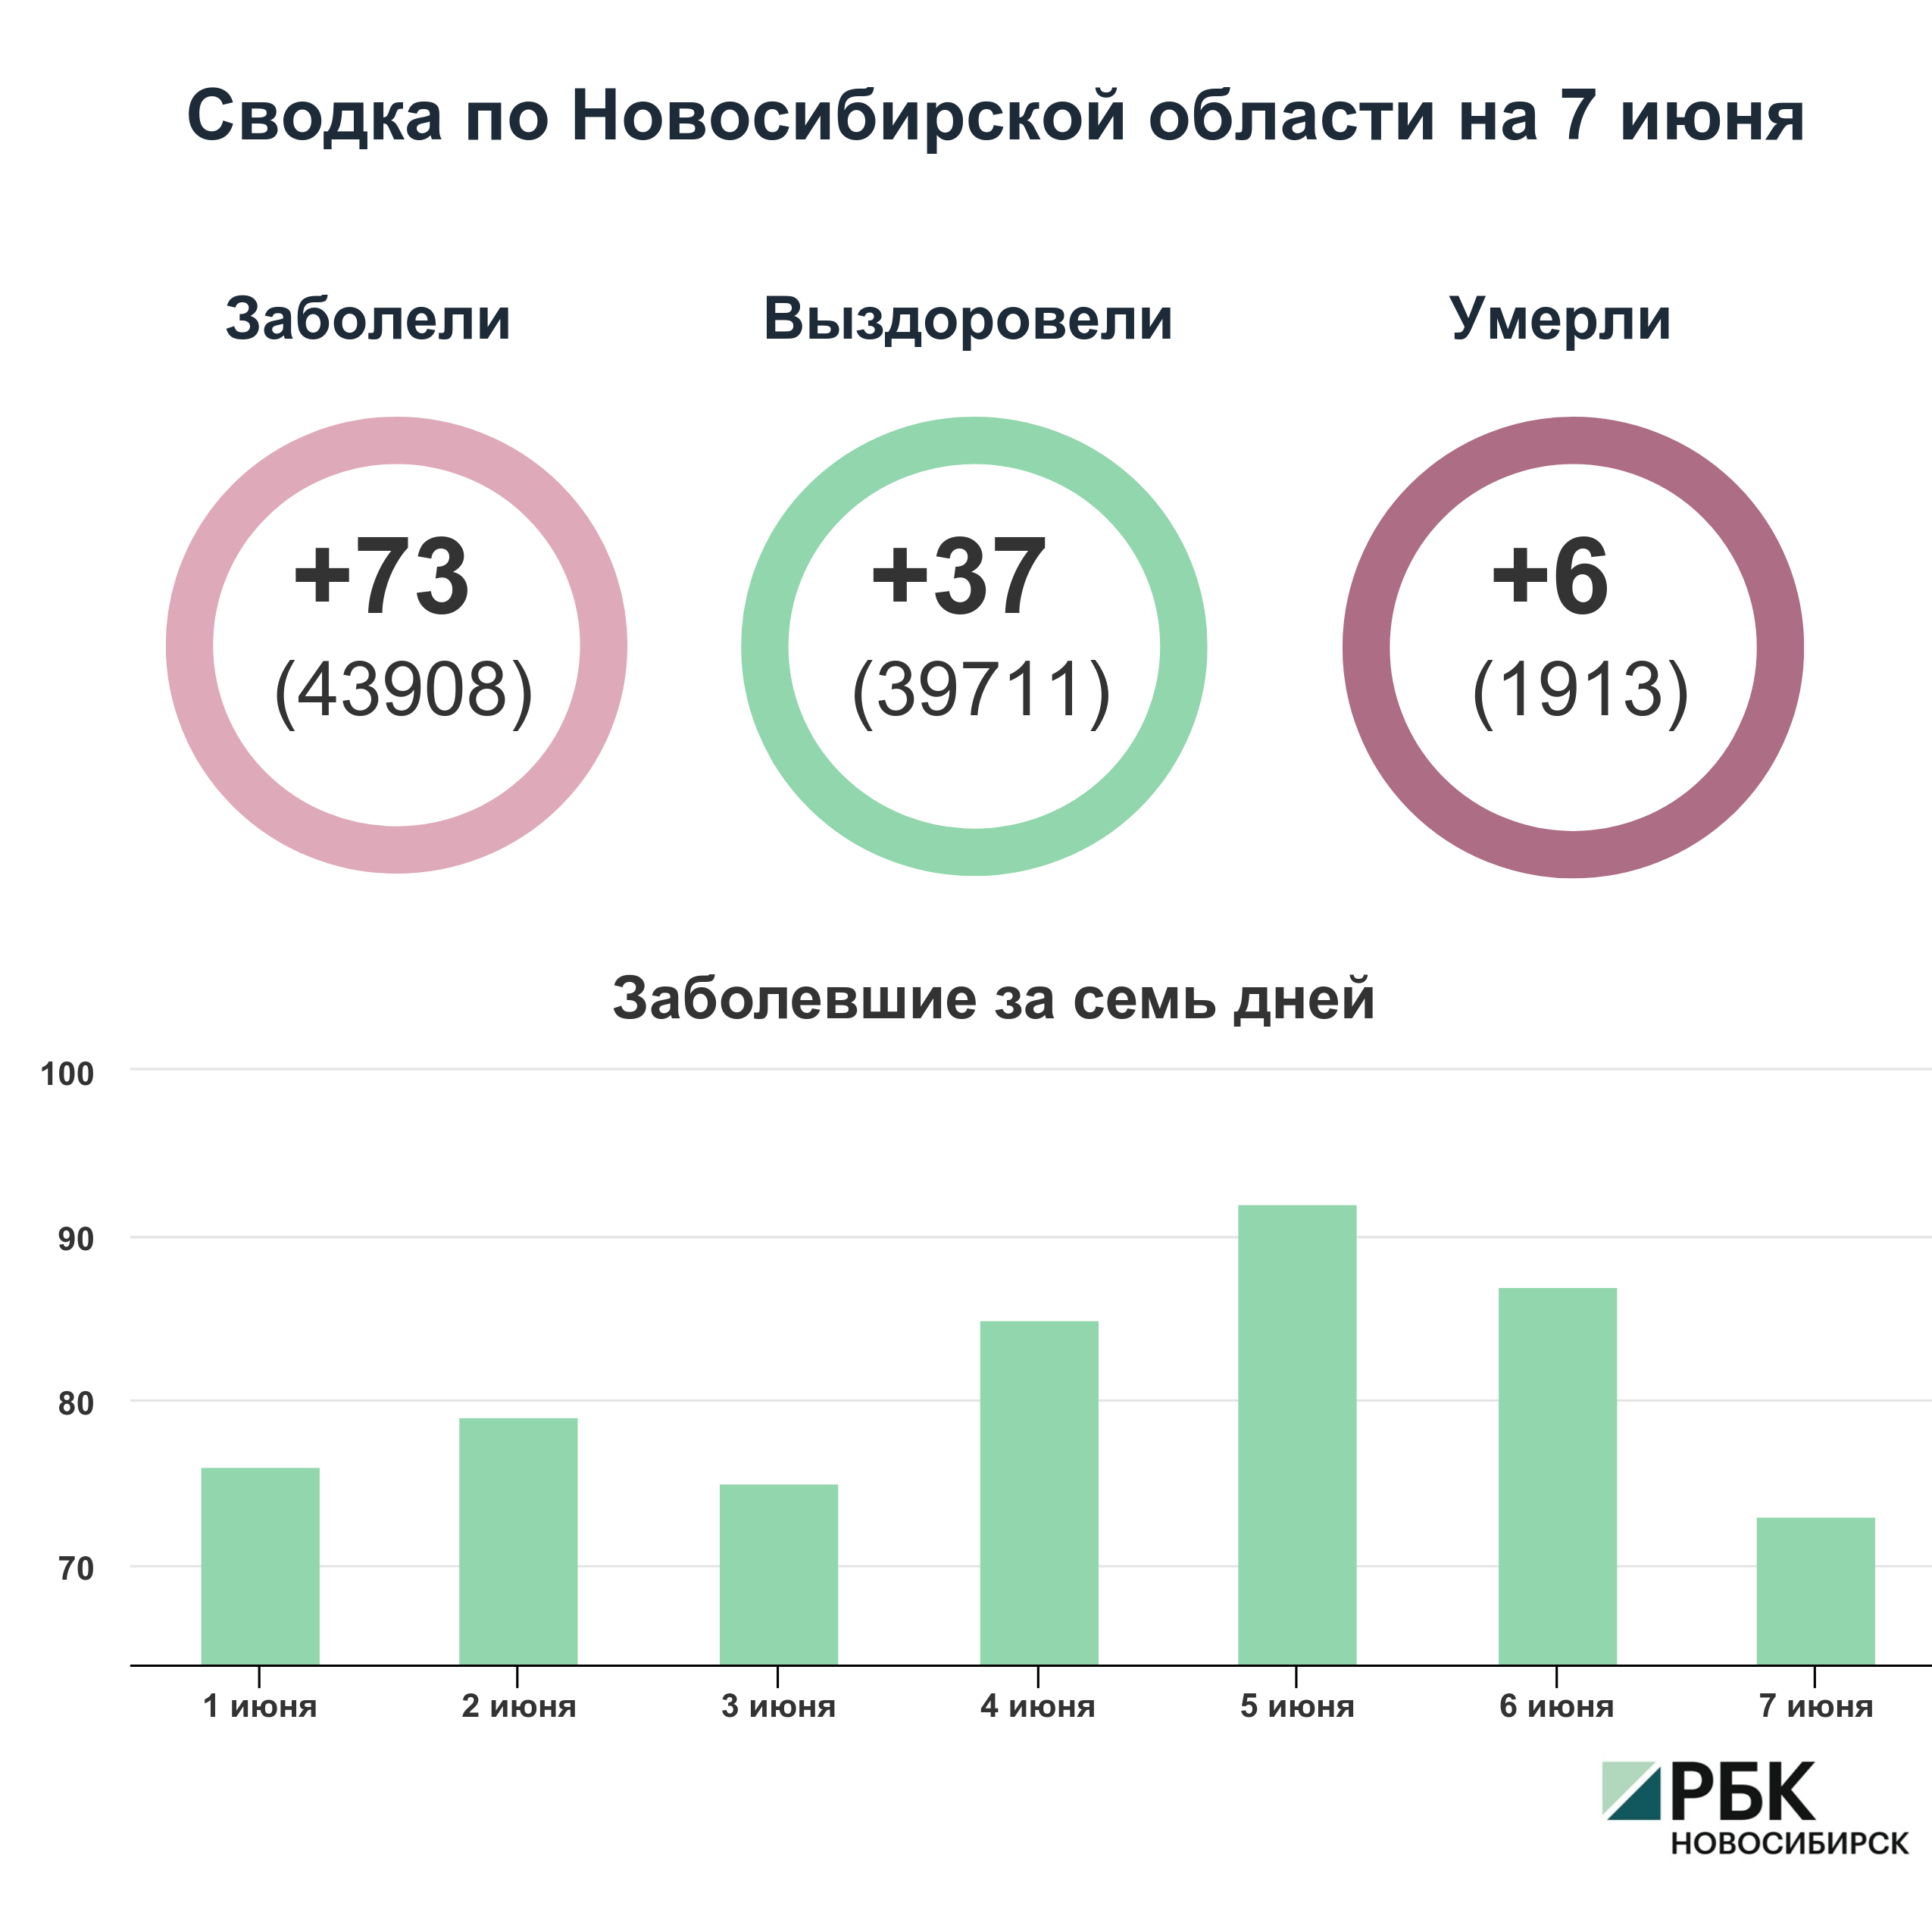 Коронавирус в Новосибирске: сводка на 7 июня